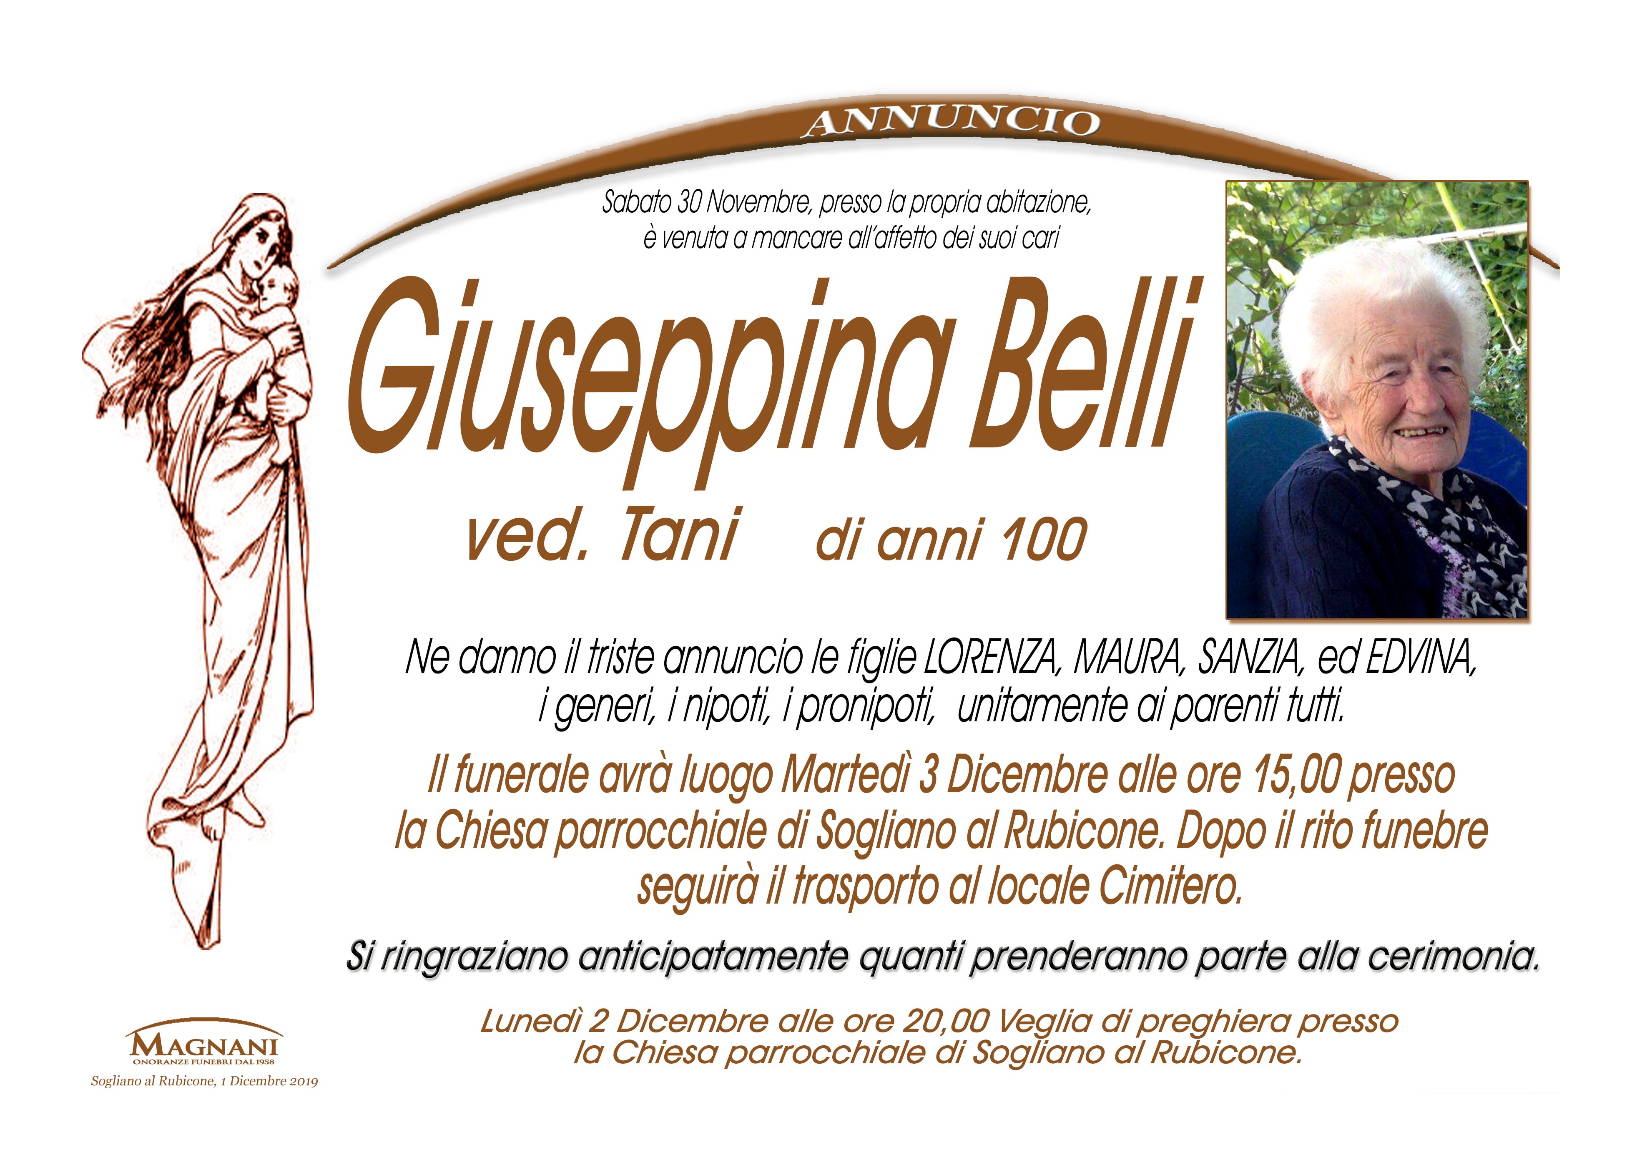 Giuseppina Belli